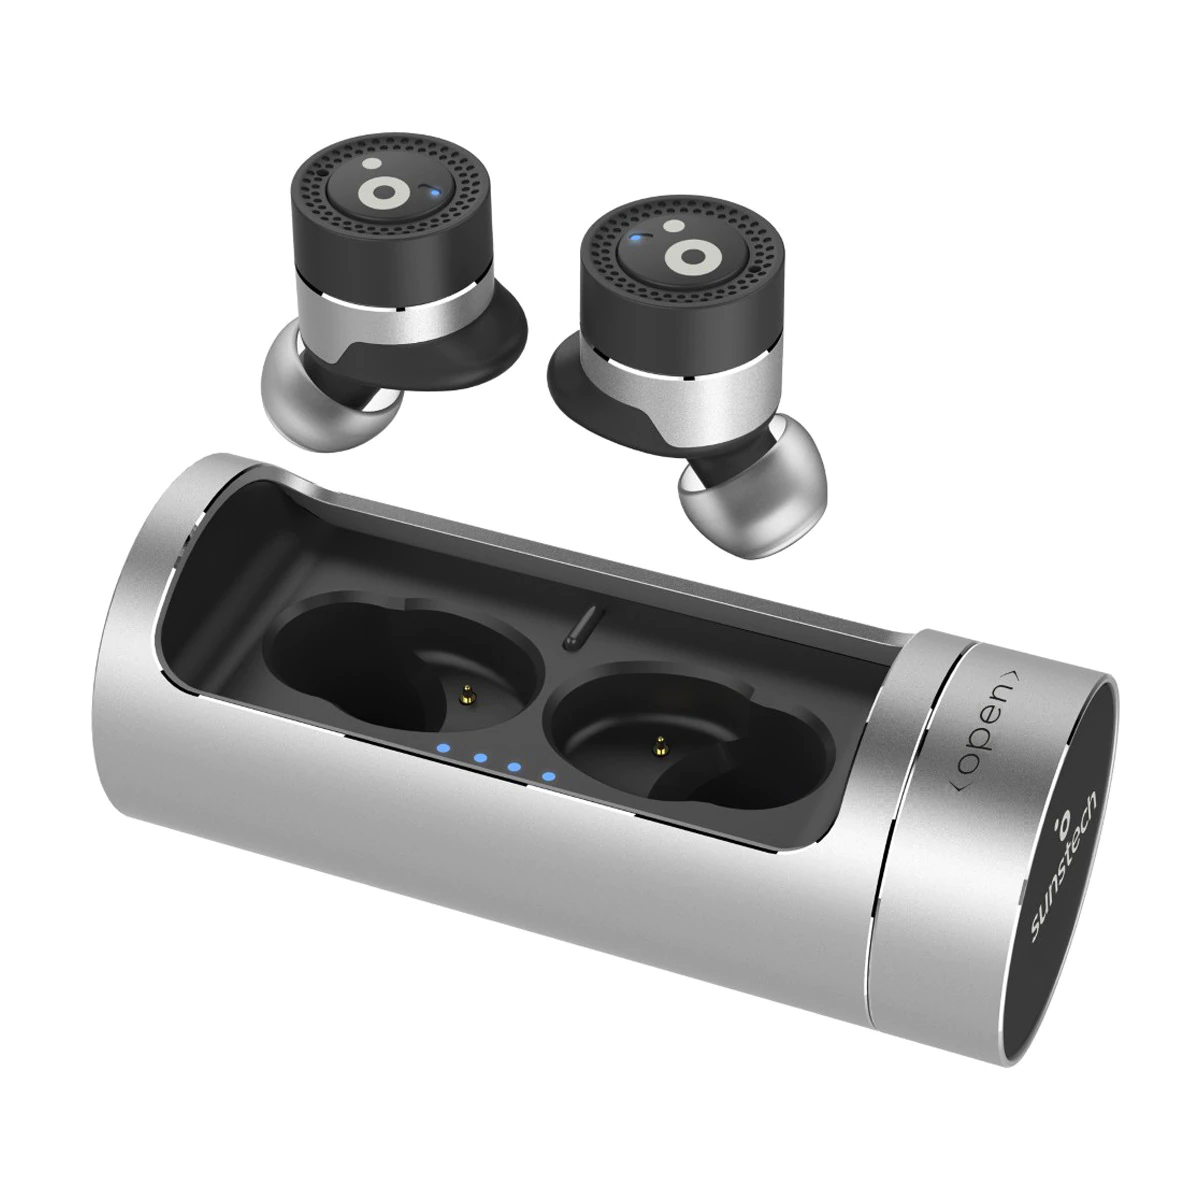 Auriculares de botón Sunstech WavepodsByz con Bluetooth y micrófono integrado